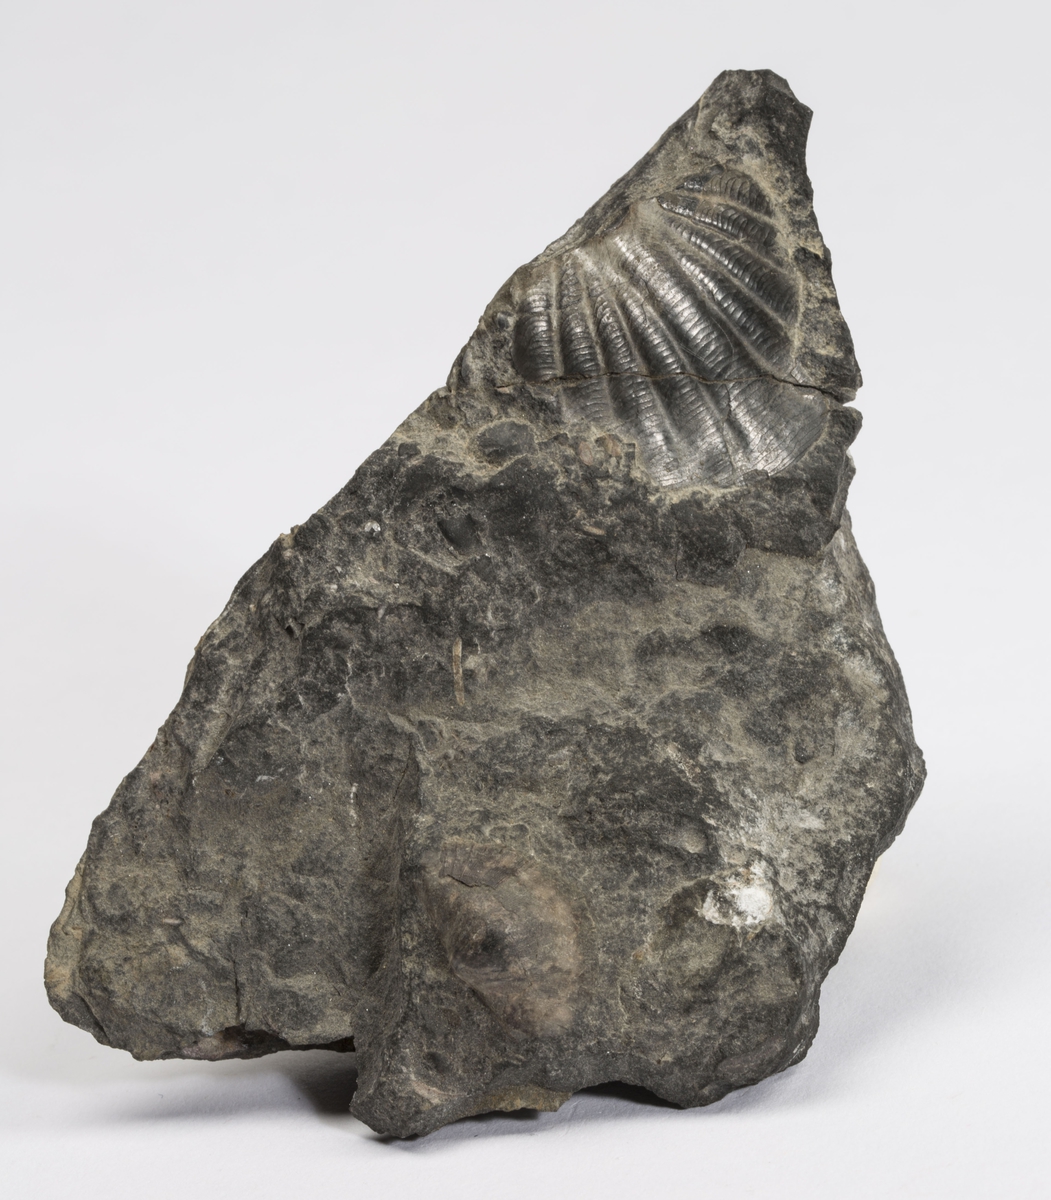 Fossil
MED BRACHIOPODEN, SOWERBYELLA SP.